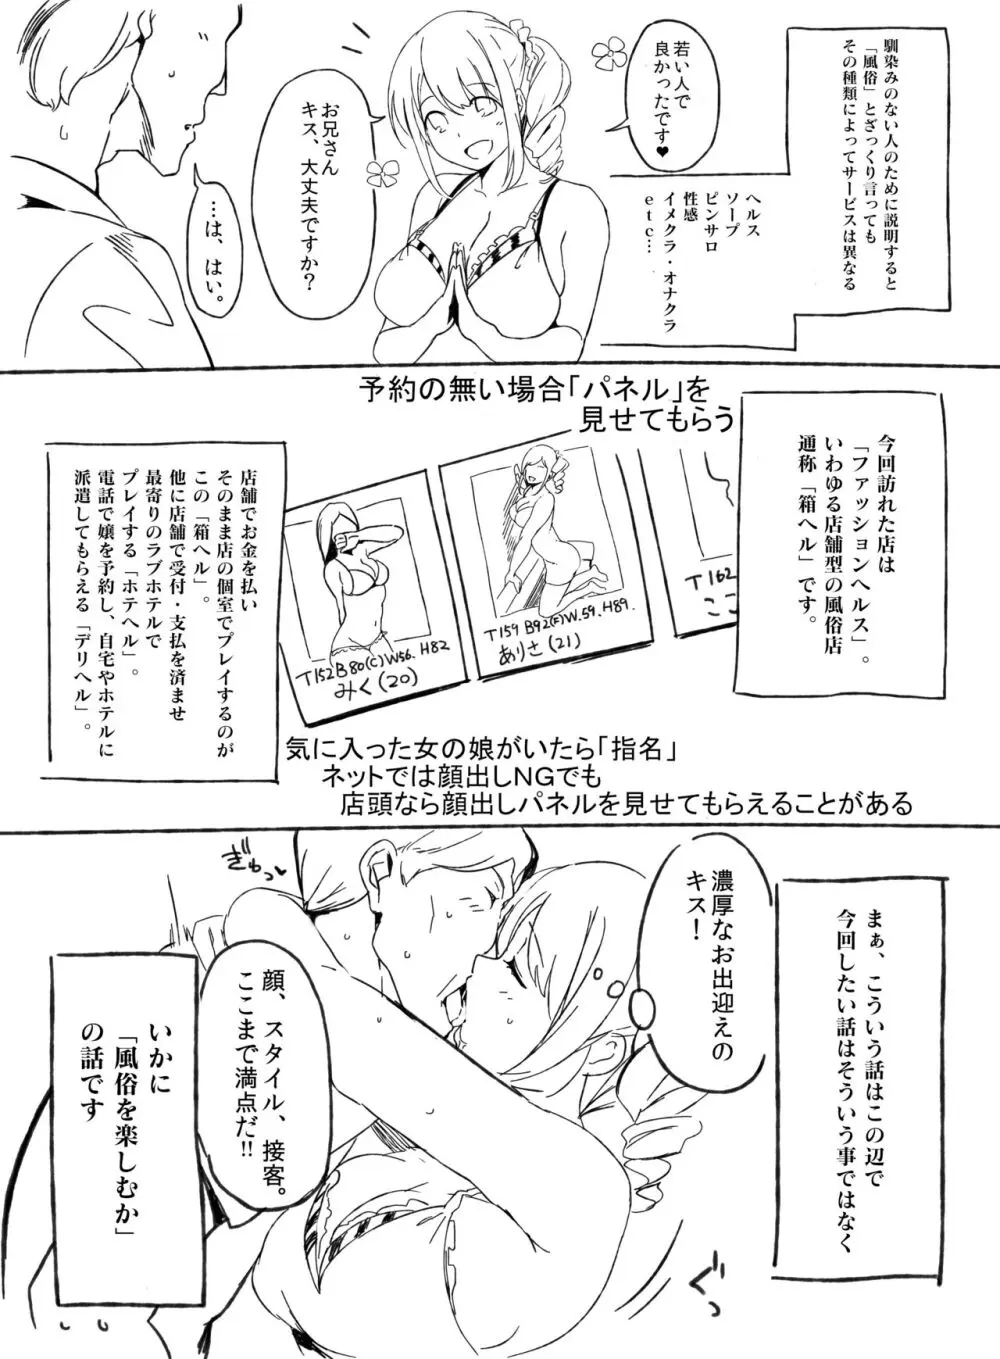 風俗実体験本 - page7